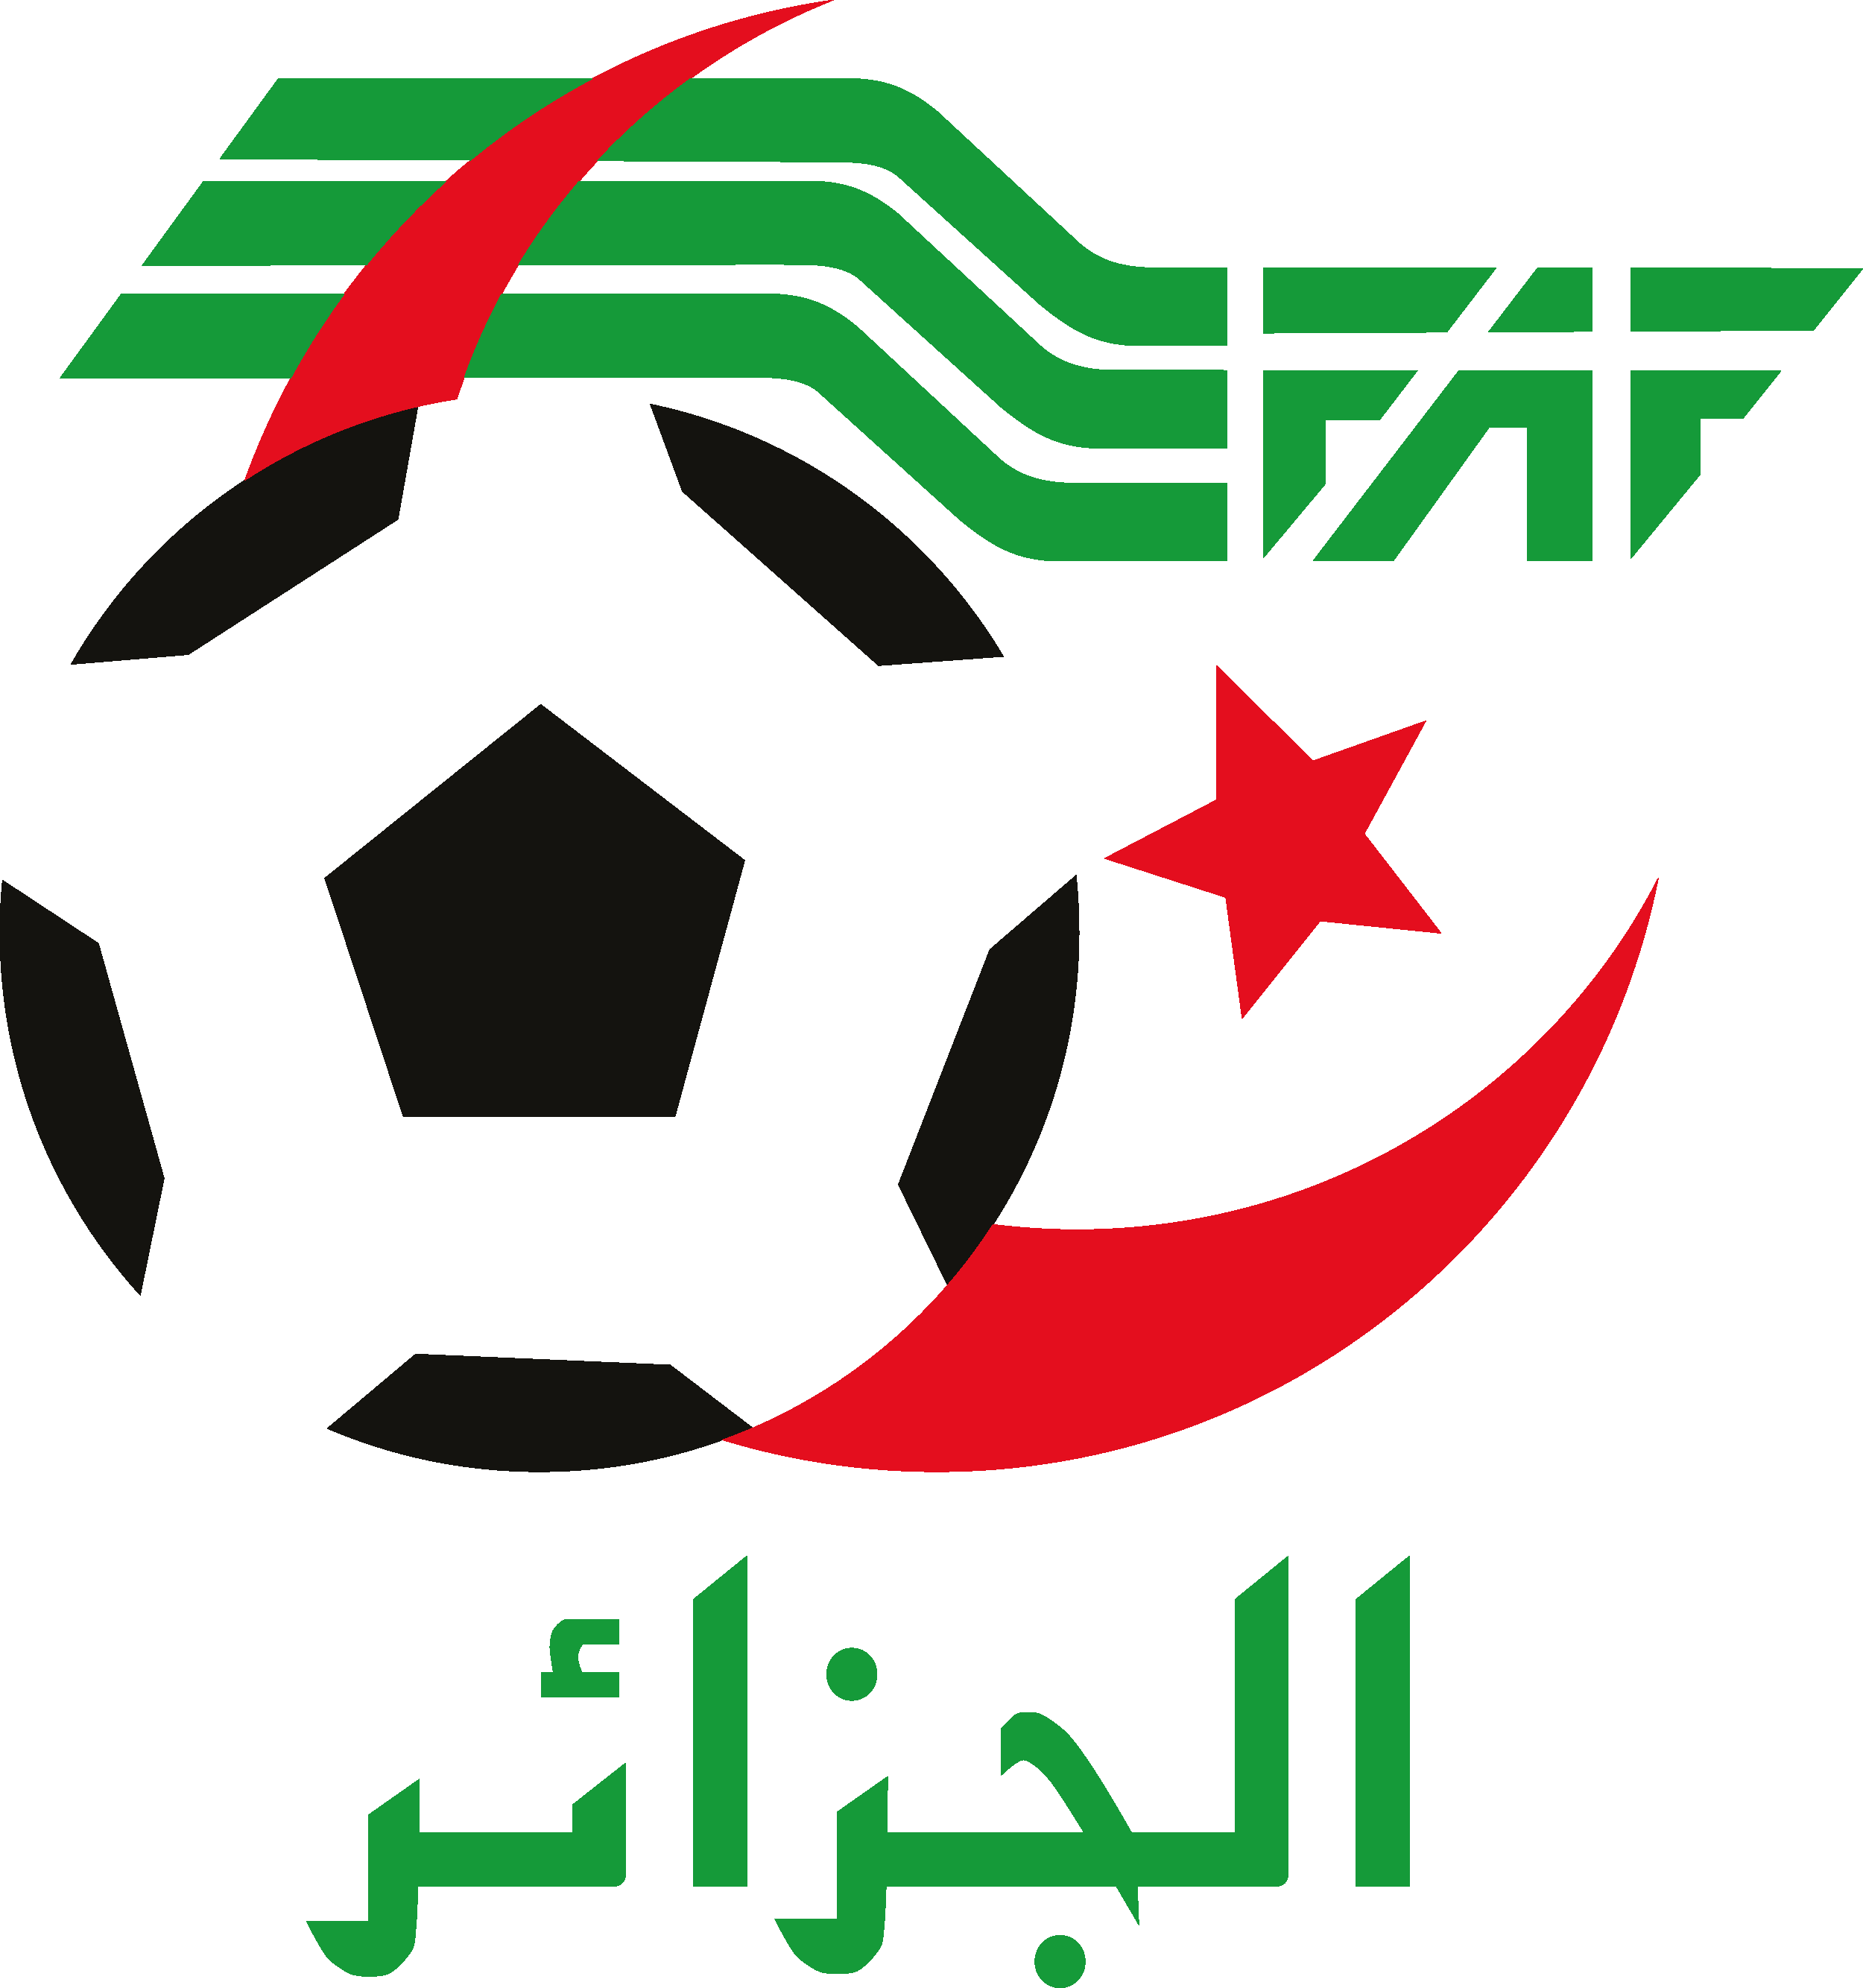 Algerian Football Federation & Algeria National Football Team Logo